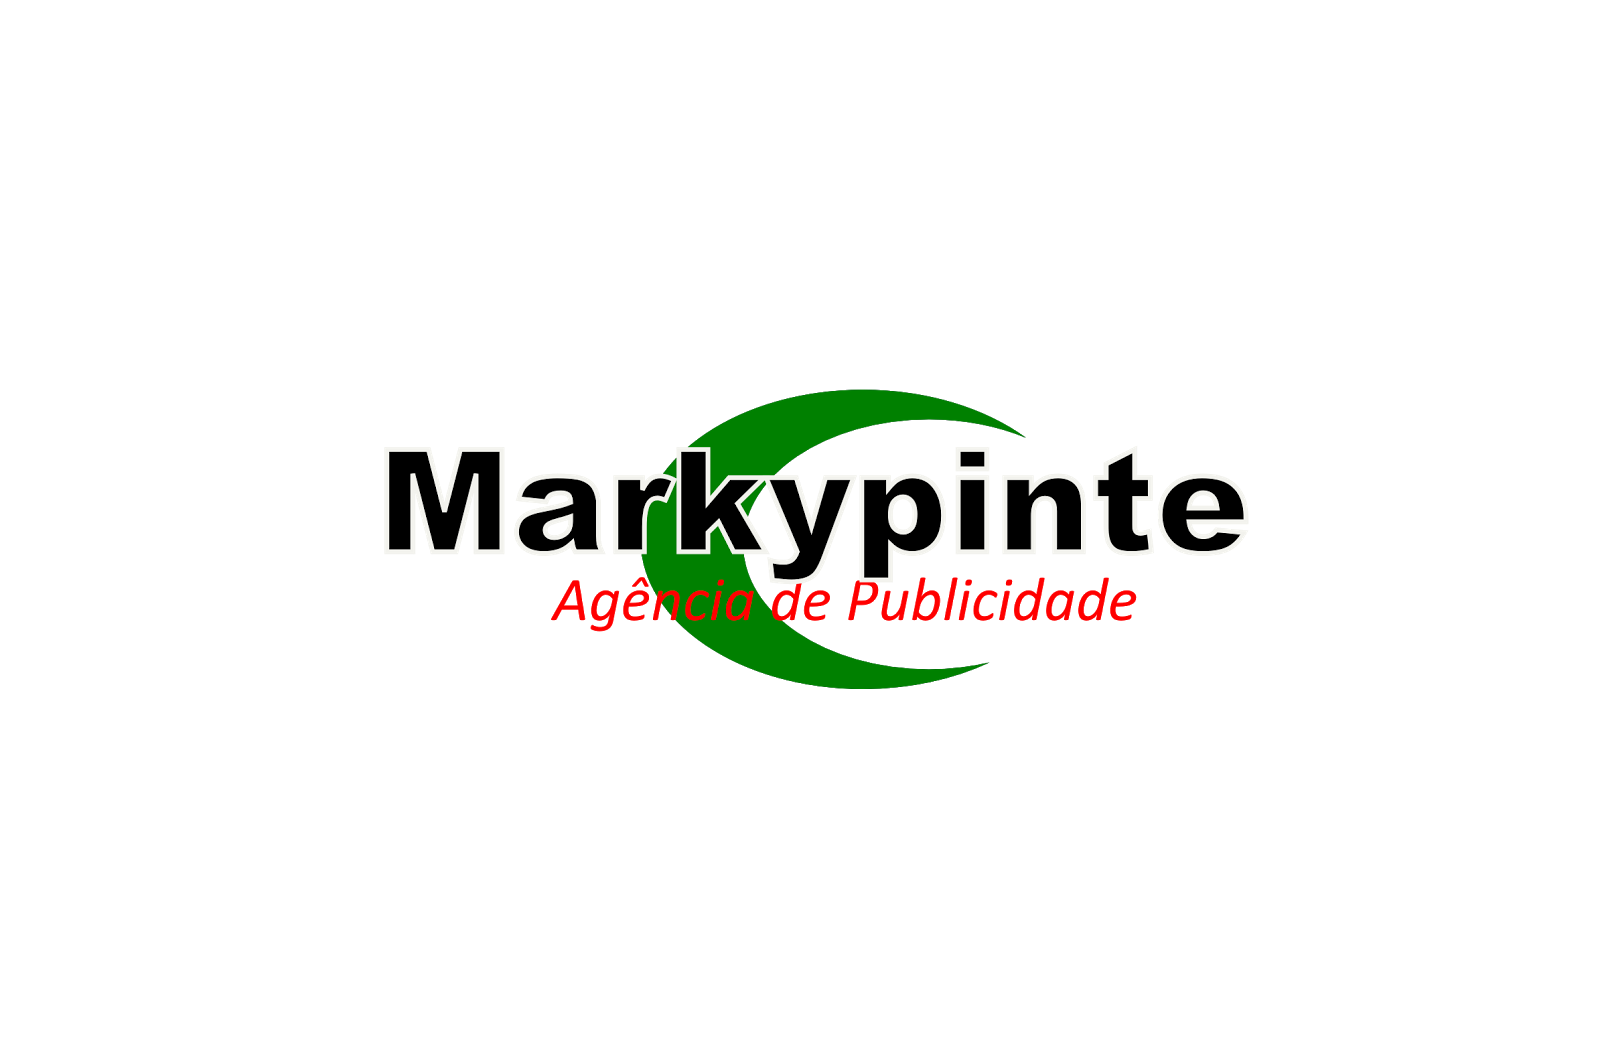 Markypinte